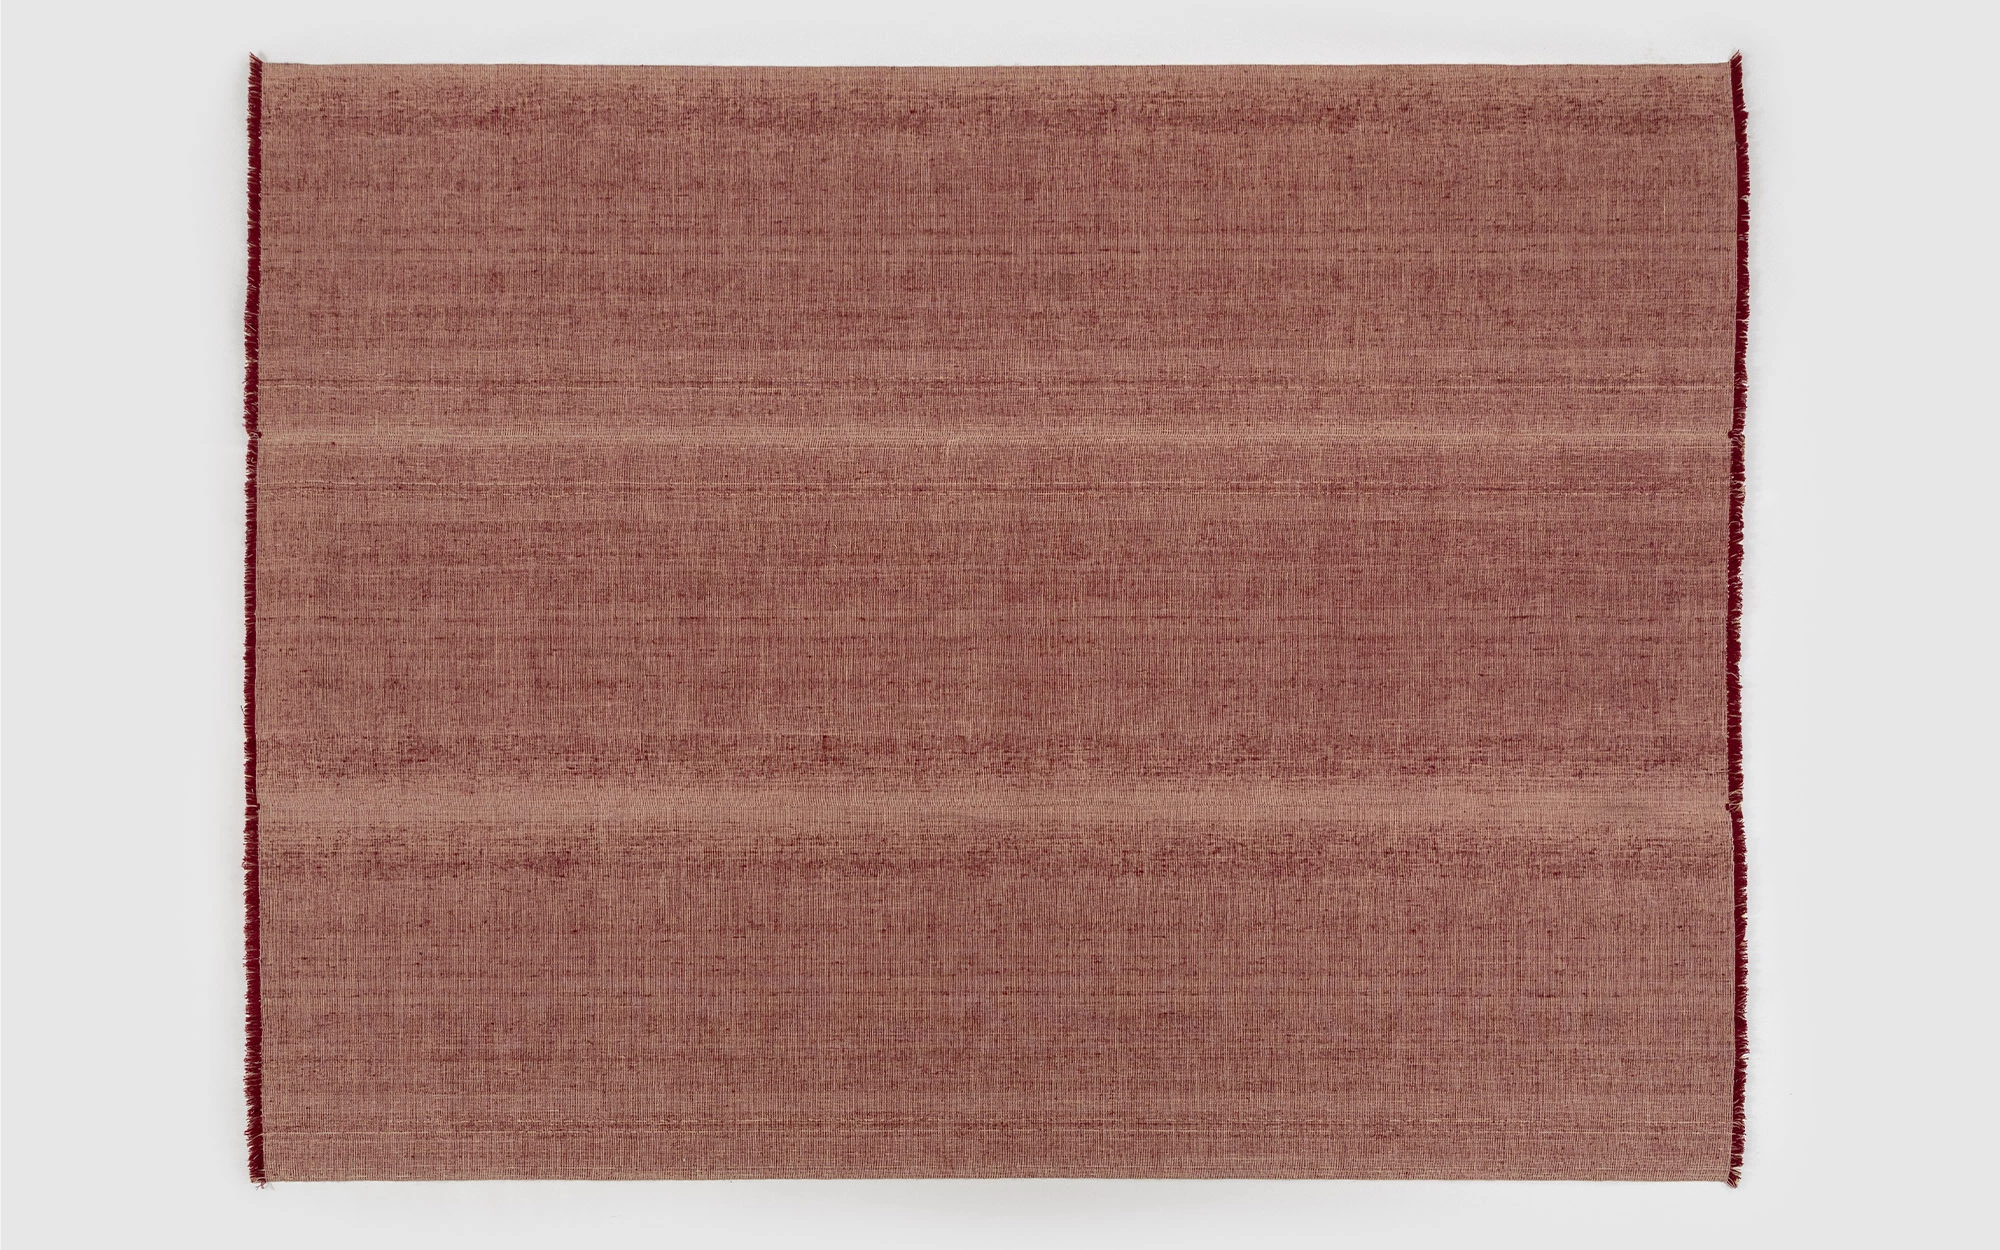 Wilton Carpet L - Ronan & Erwan Bouroullec - Floor light - Galerie kreo